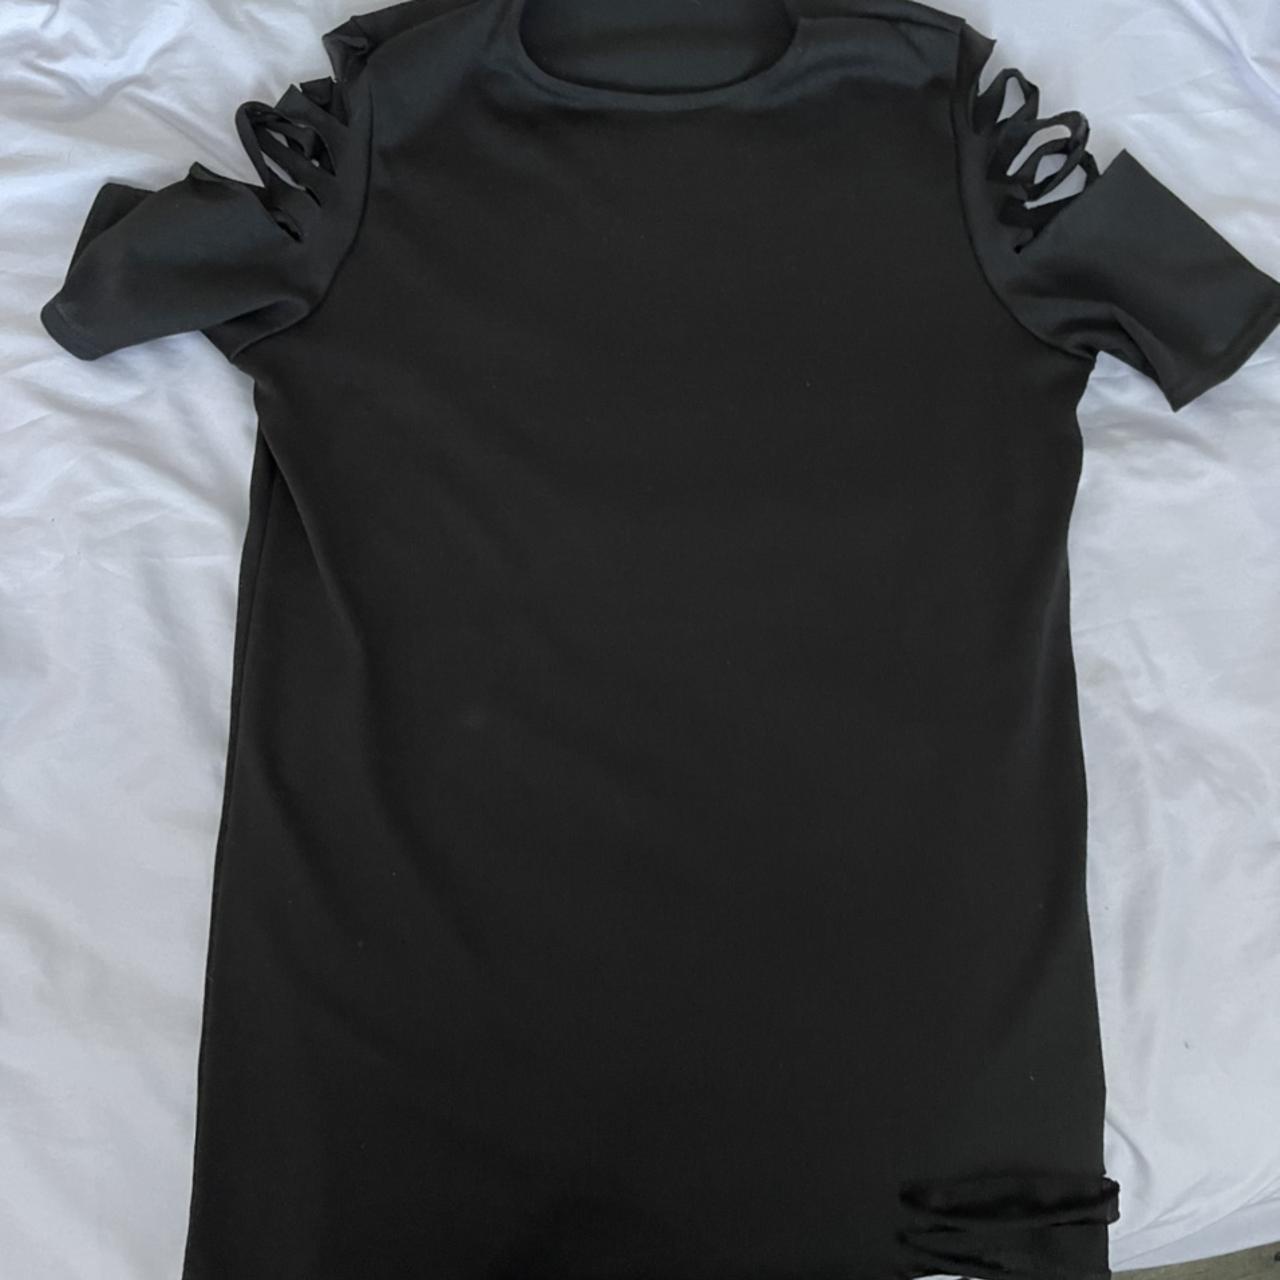 I Saw It First black T-shirt dress with distressed... - Depop